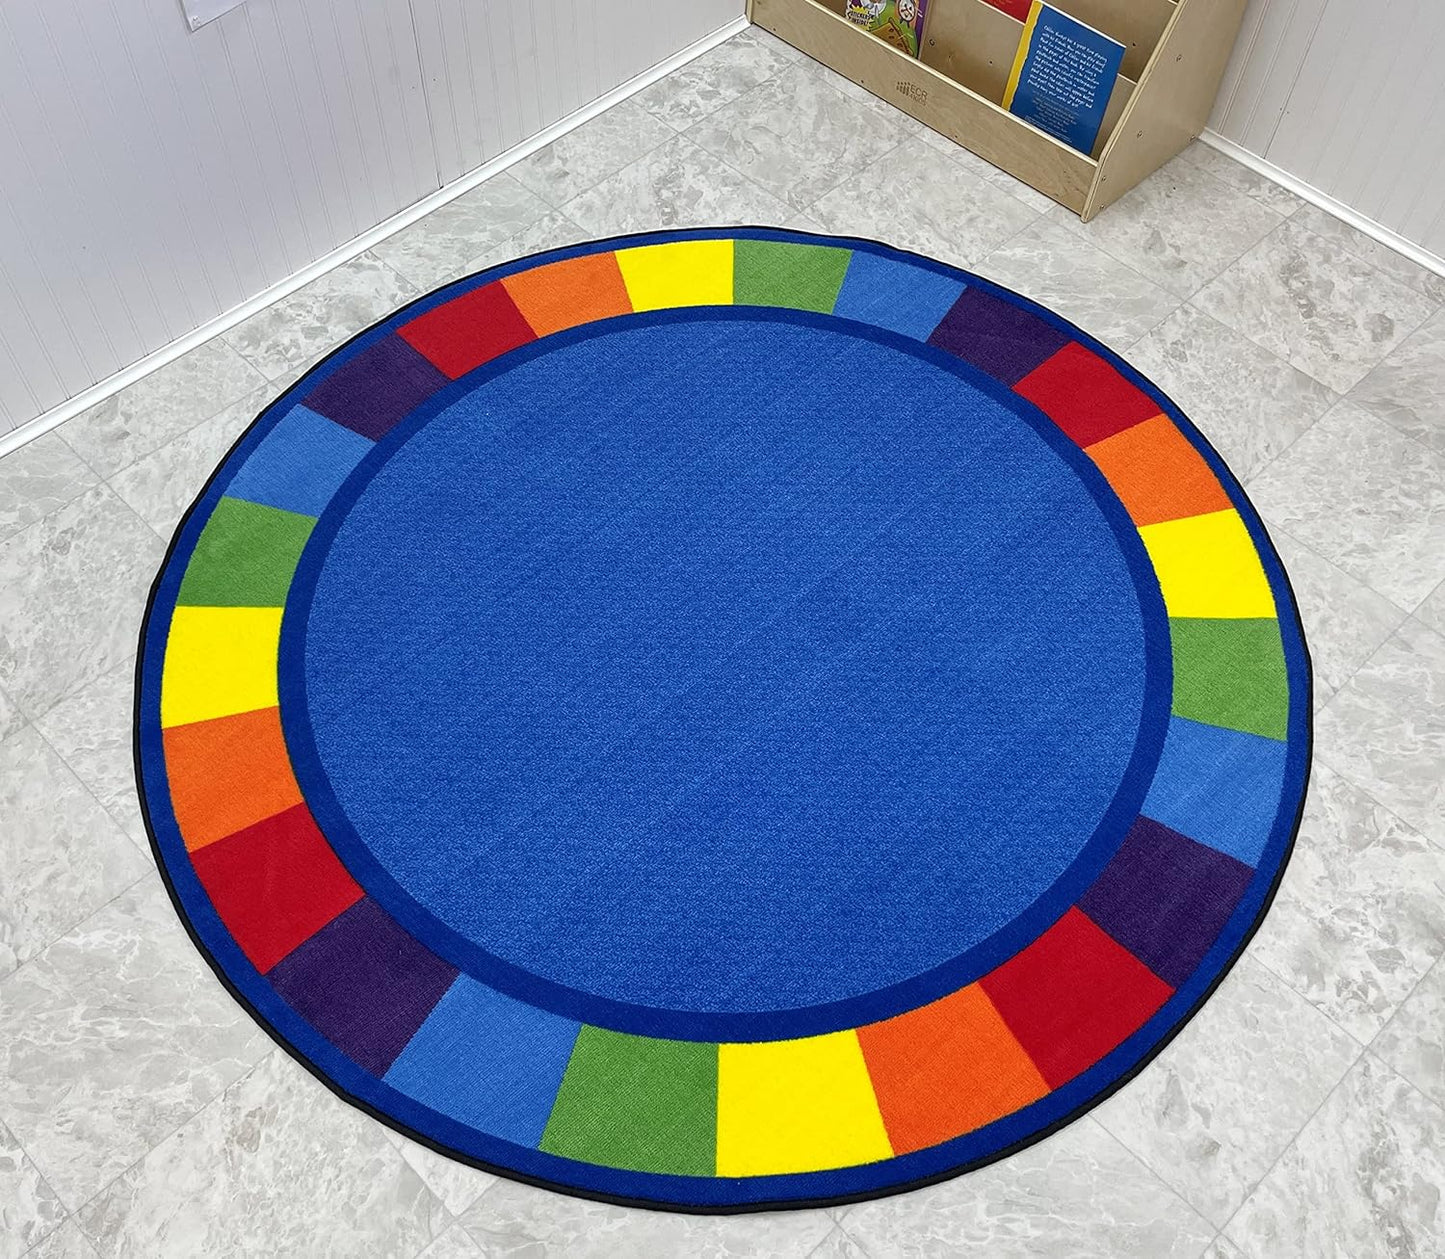 Round Classroom Carpet: 'Colors Full Circle' by KidCarpet.com, 6' Diameter